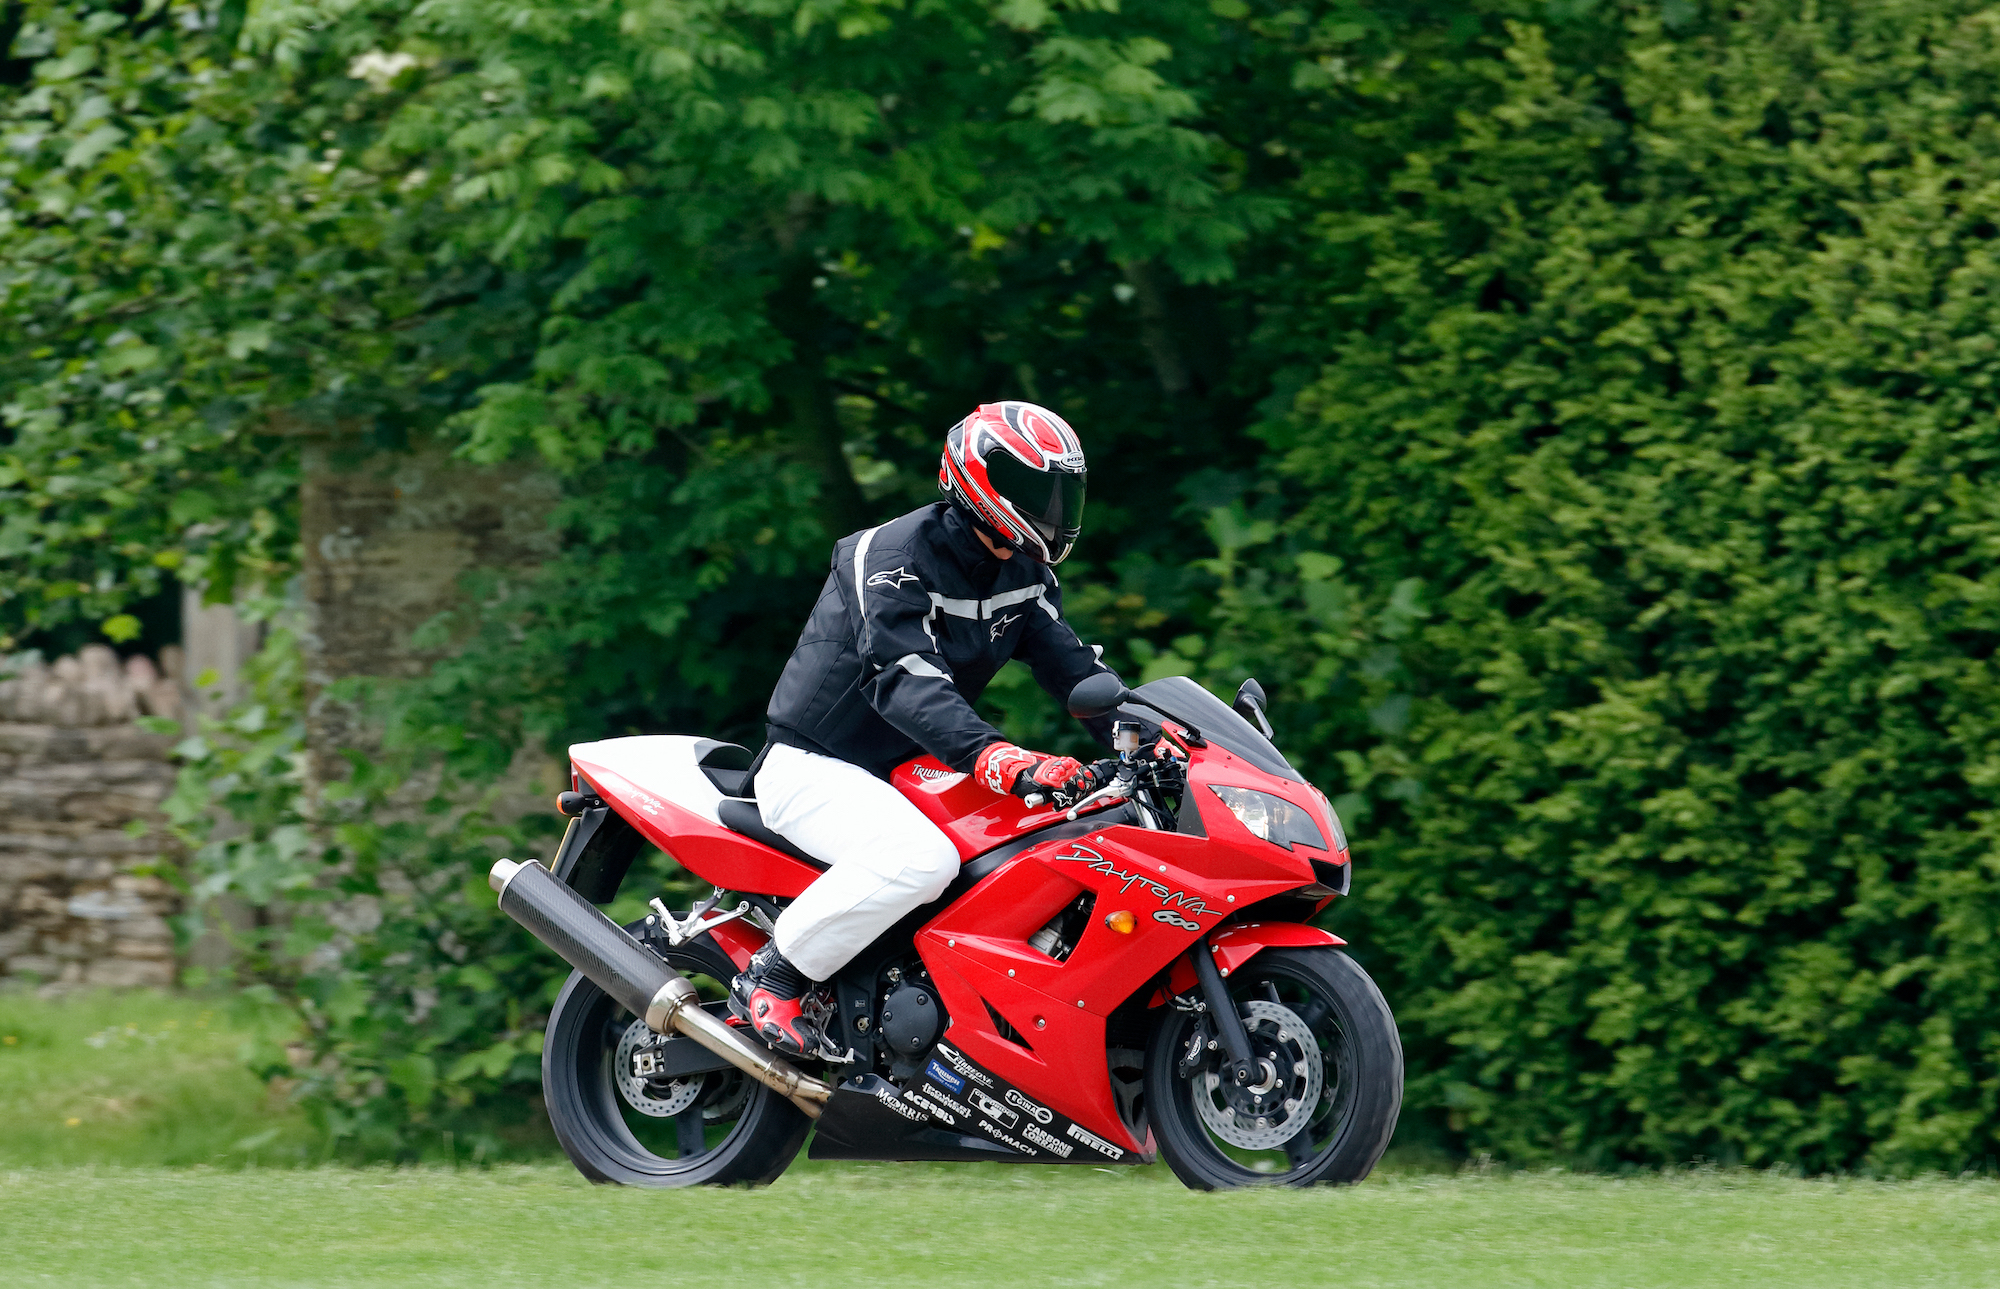 Prince William wears a motorcycle helmet as he rides a Triumph Daytona 600 motorbike in July 2005